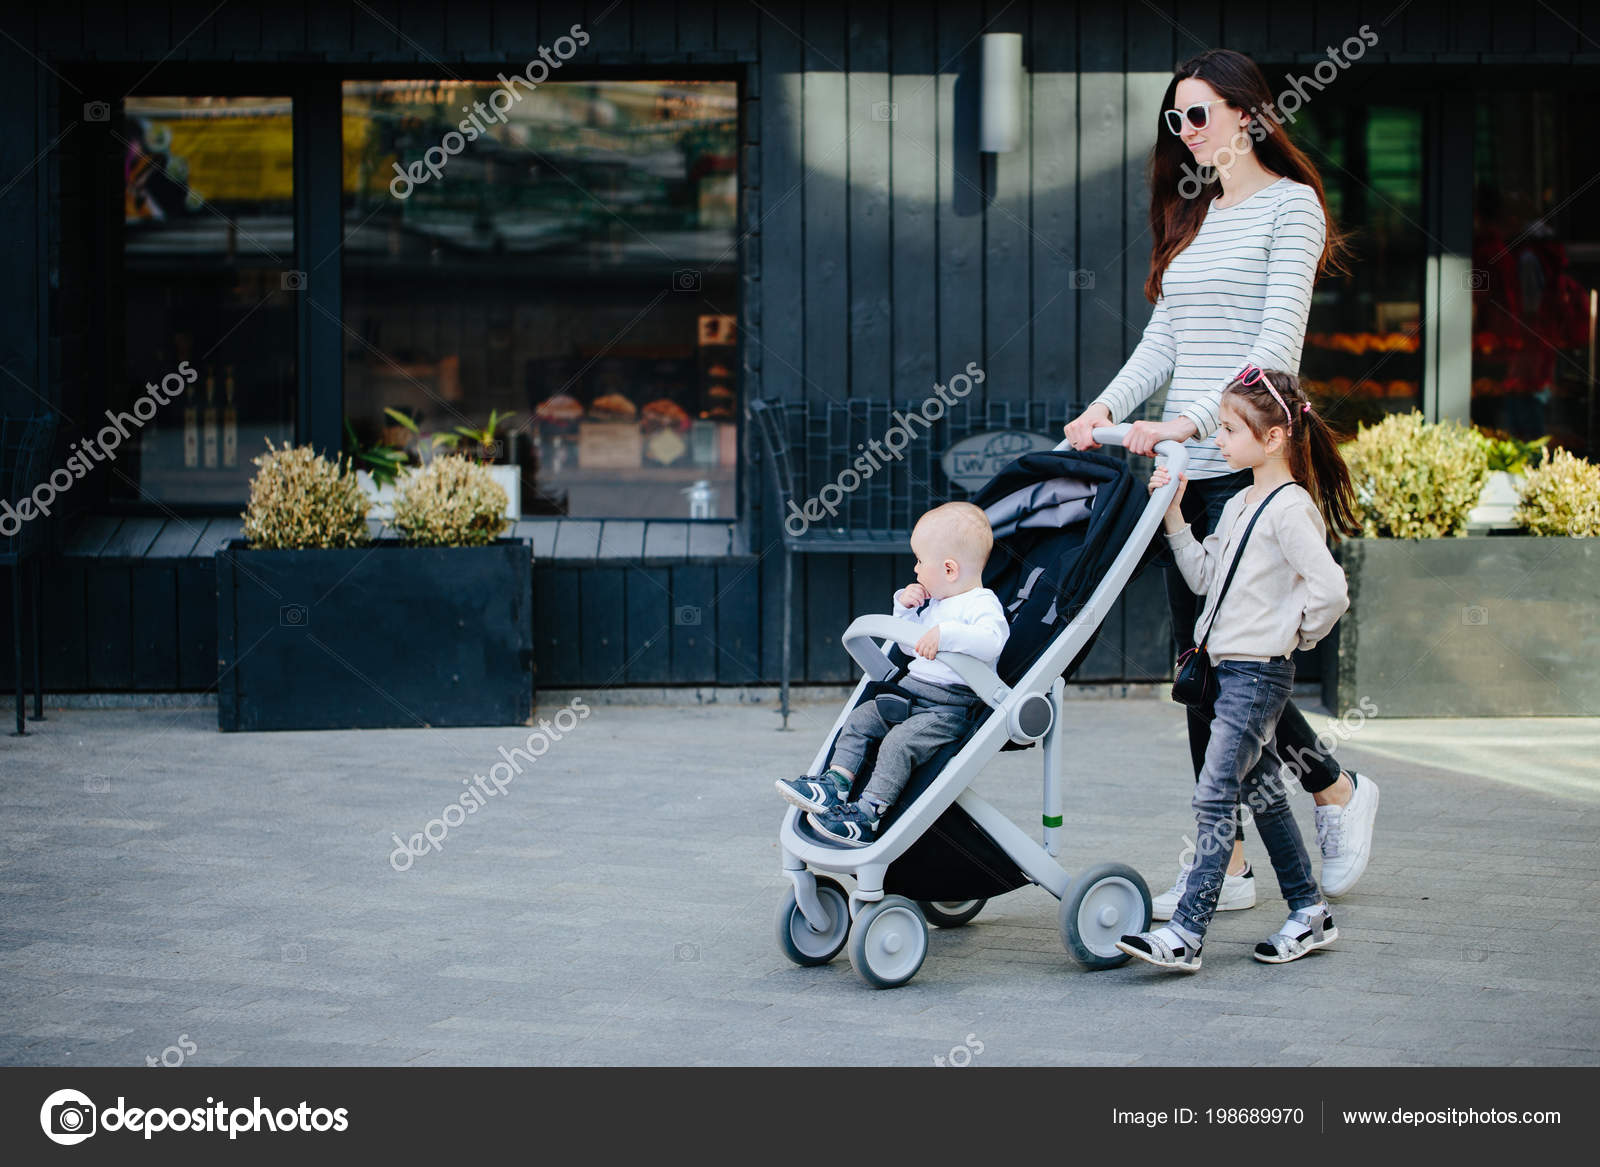 city street stroller